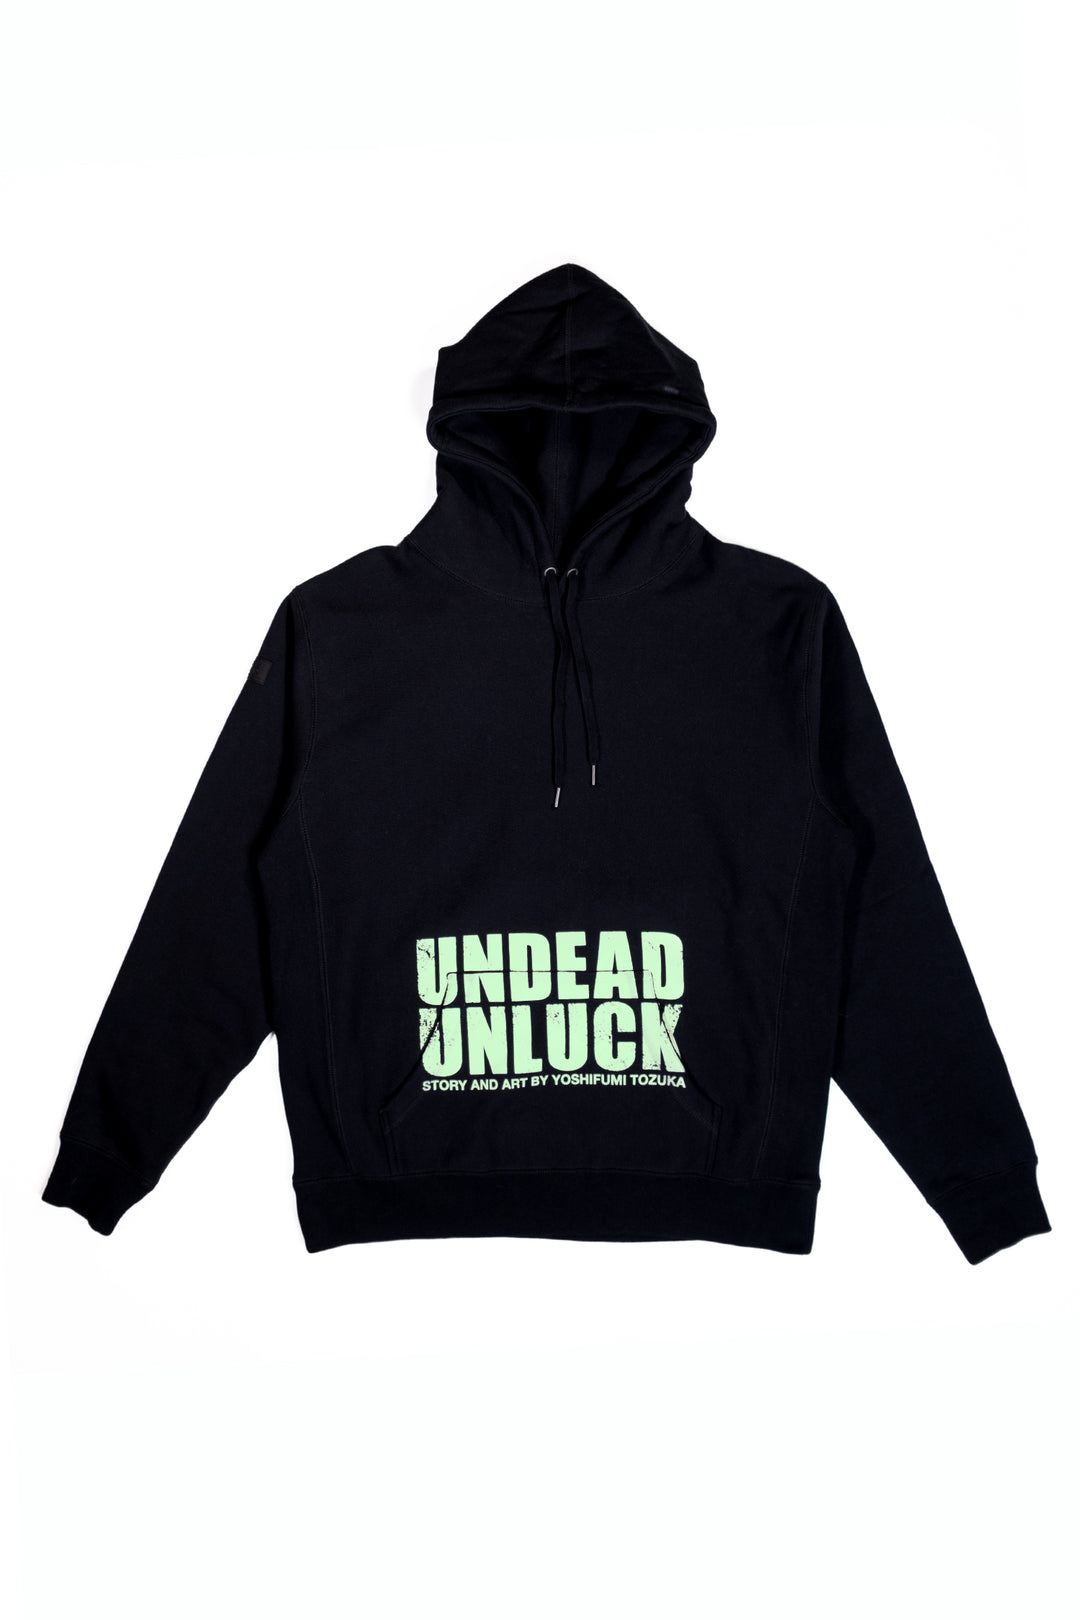 Undead Unluck Dead End Hoodie - Black